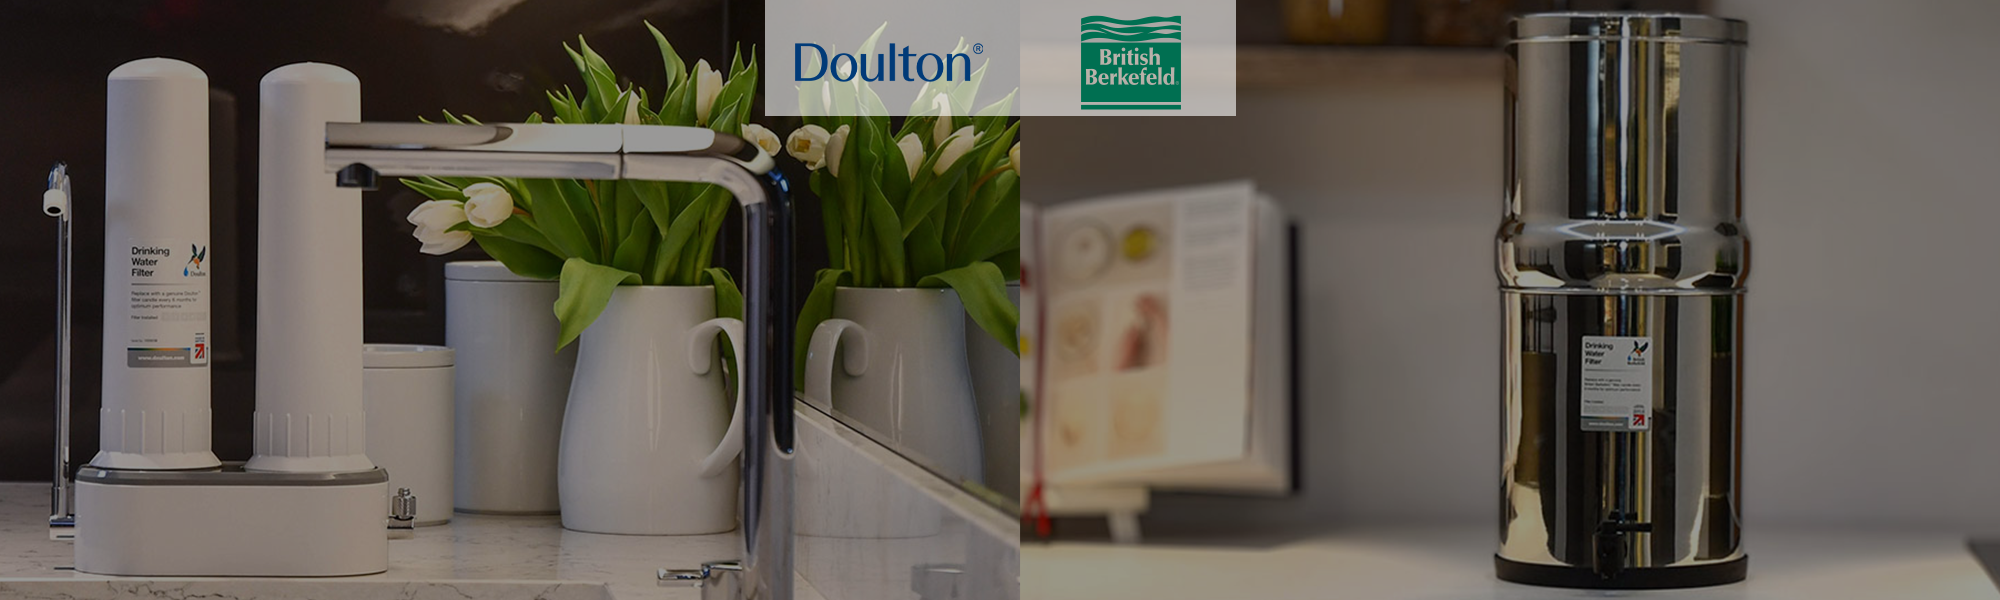 Image showcasing the Doulton brand logo alongside the British Berkefeld.